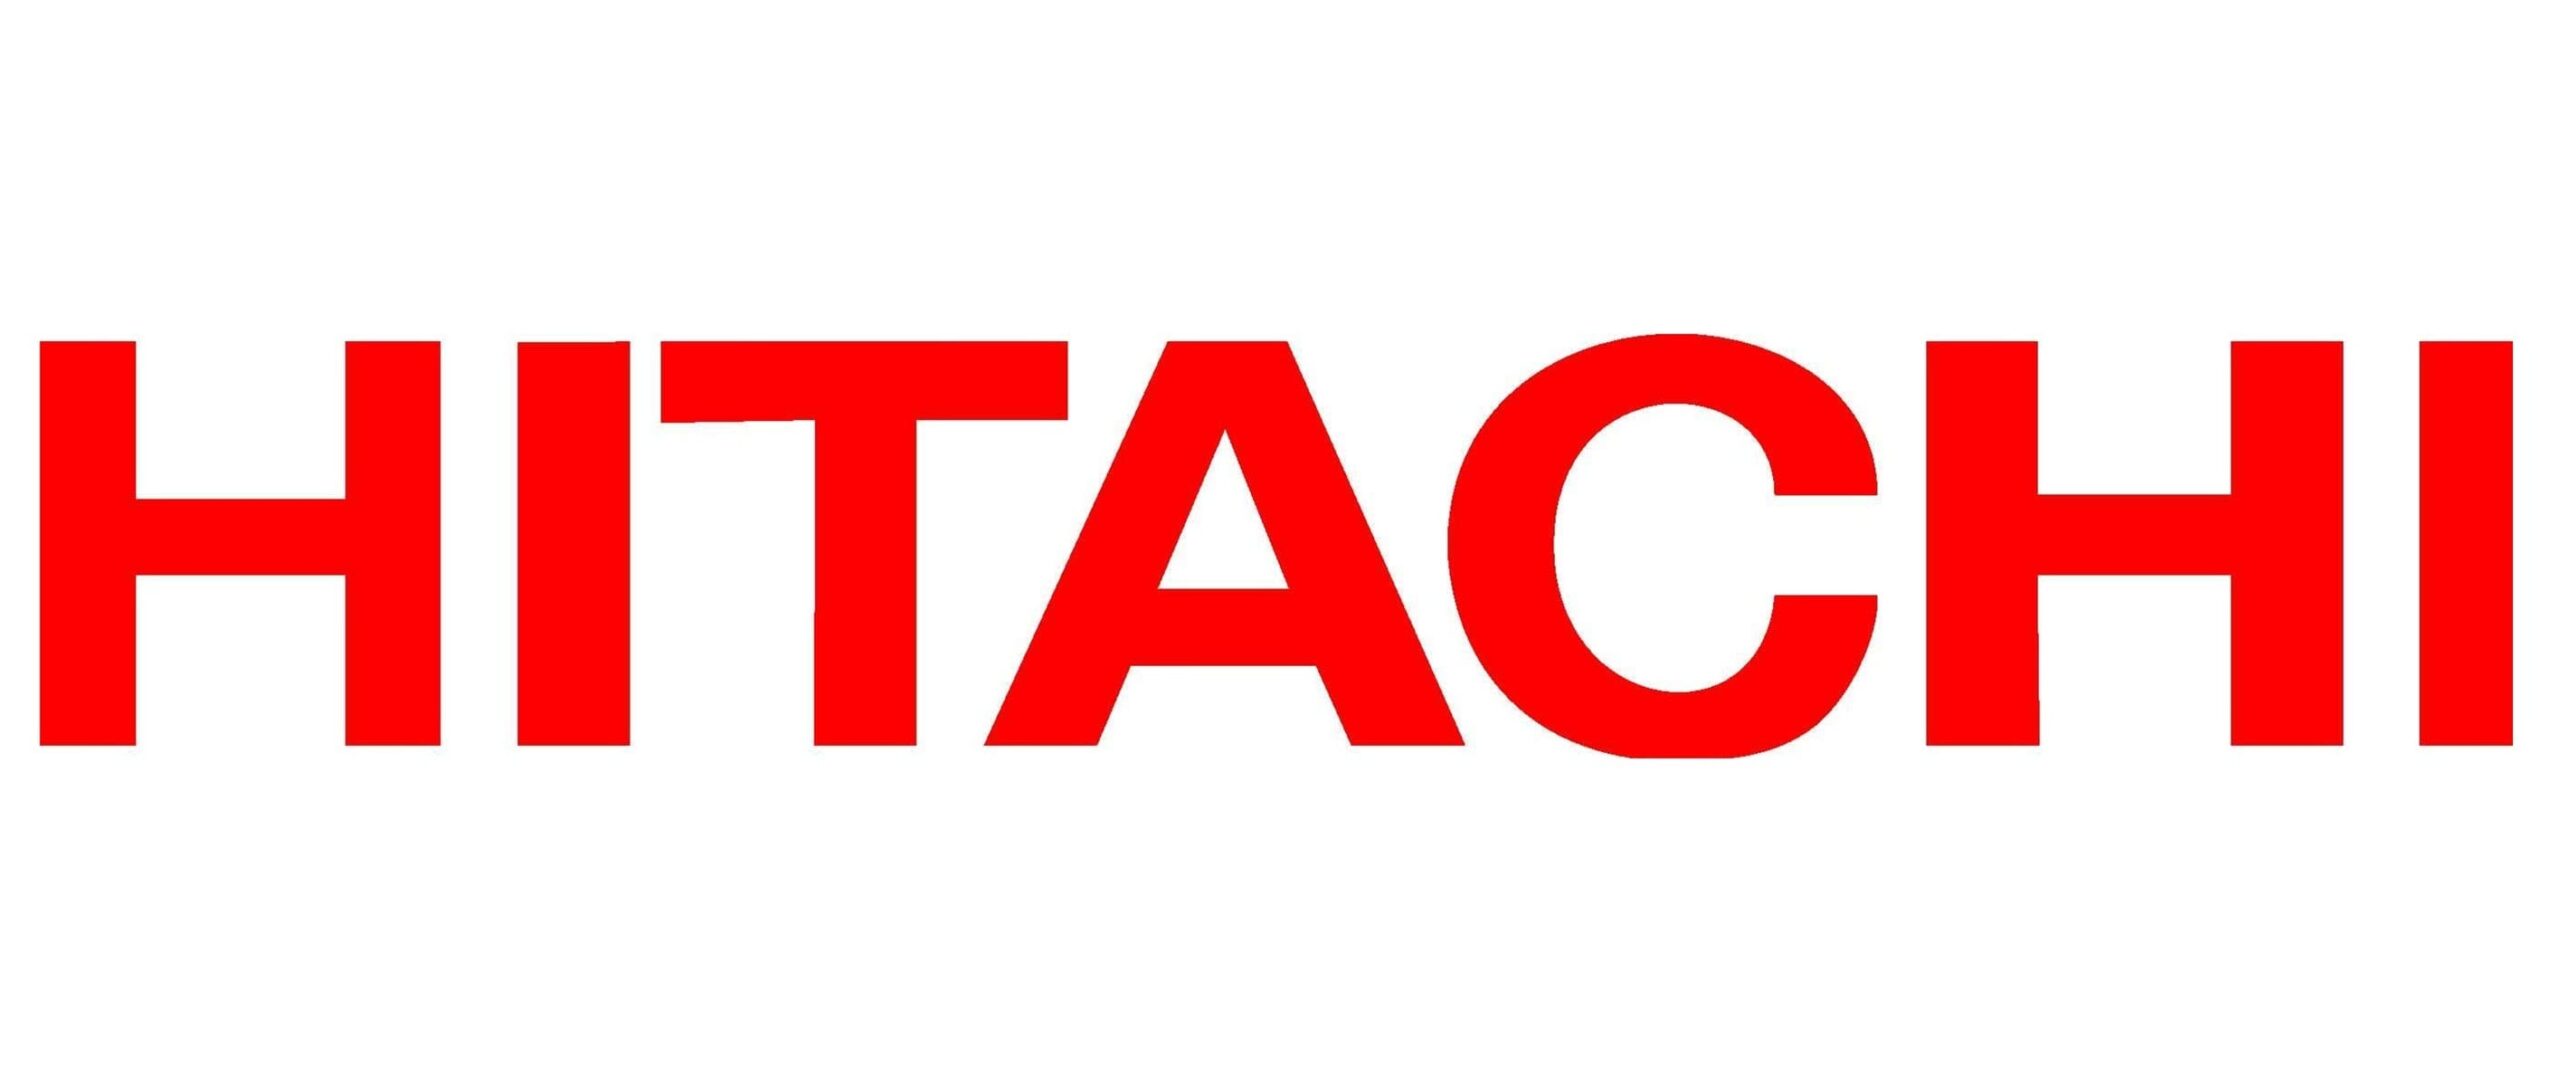 Hitachi-logo